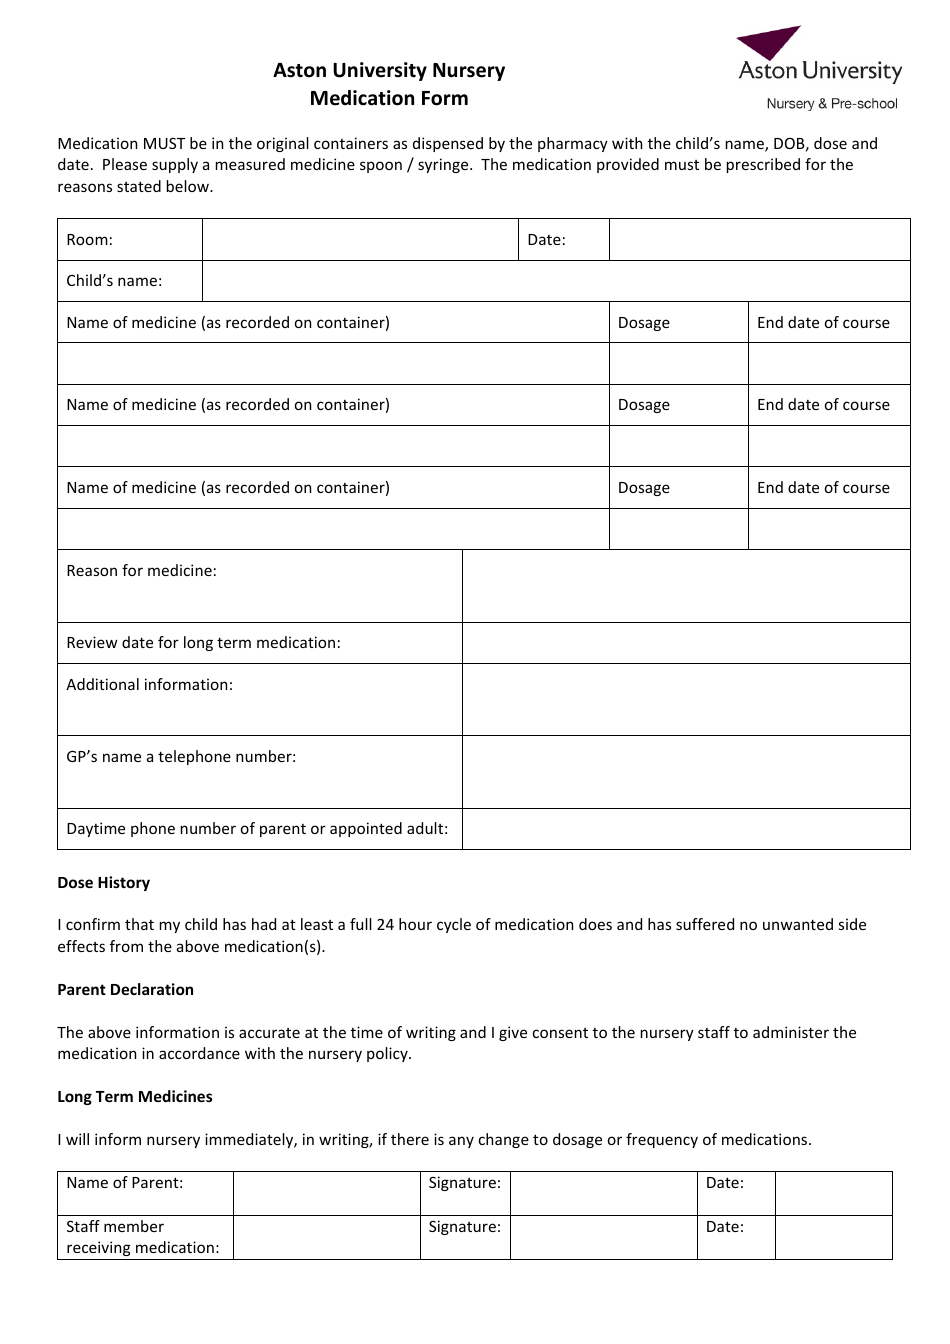 Nursery Medication Form - Aston University, Page 1